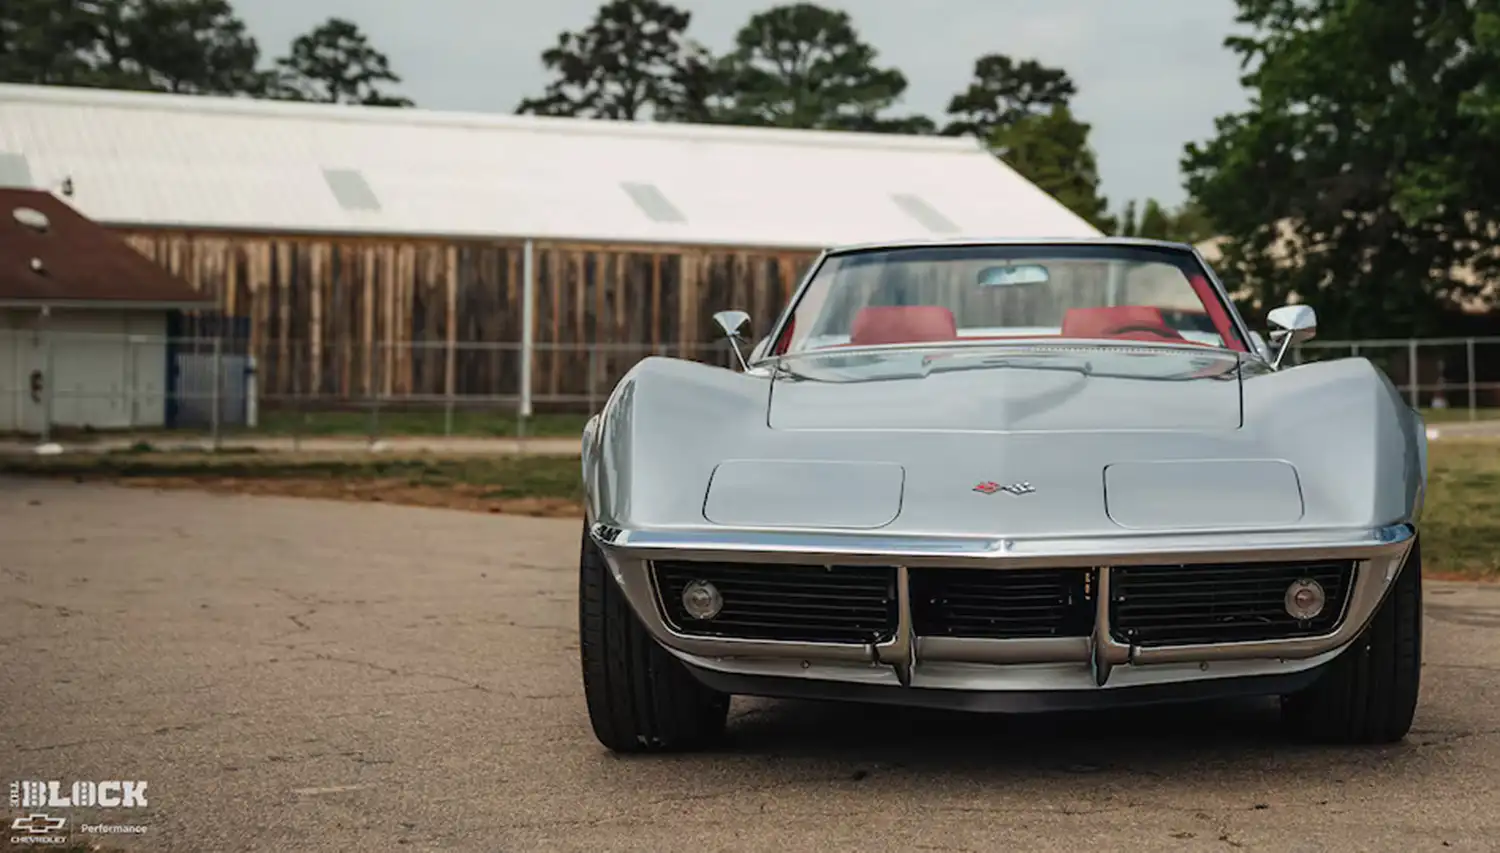 Don Milligan’s 1969 Corvette Stingray – A Restomod Marvel